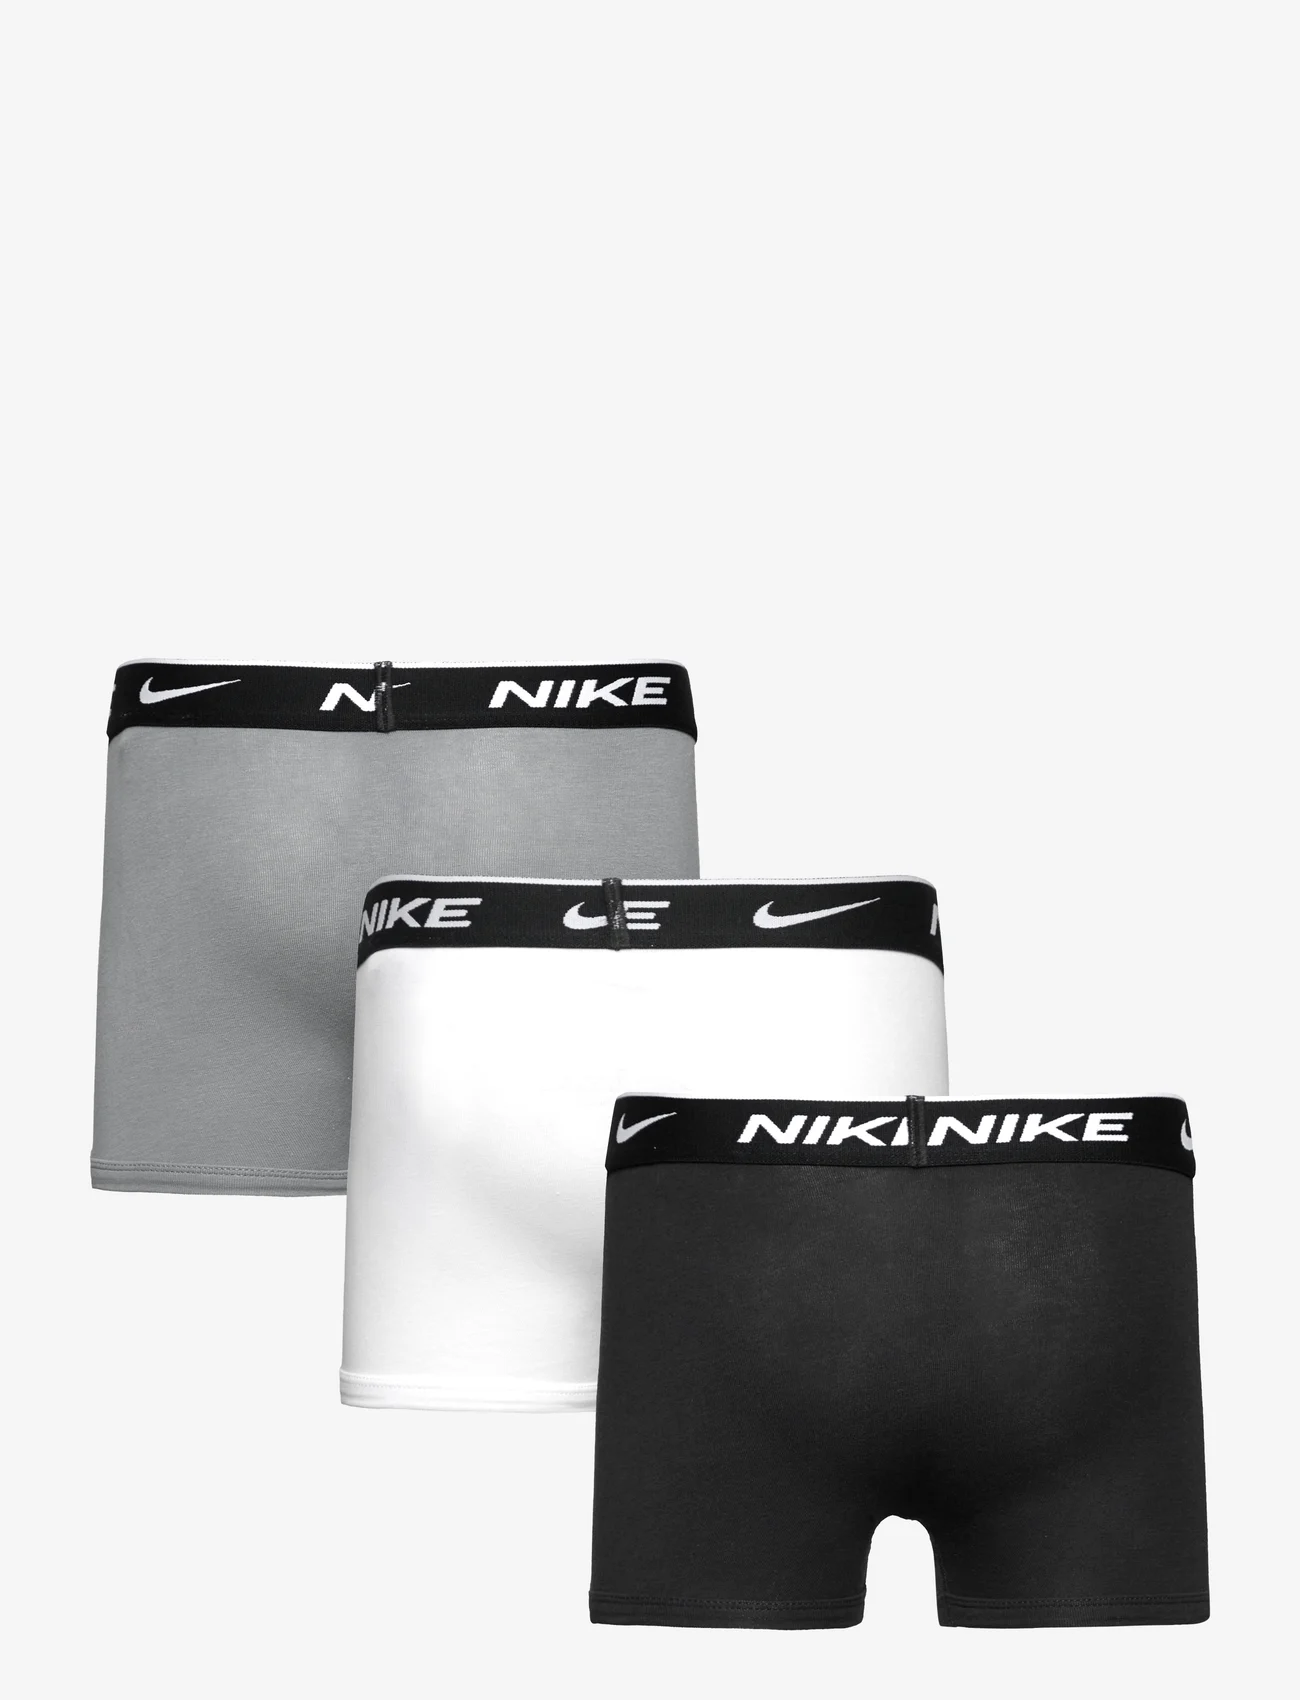 Nike - NHB NHB E DAY COTTON STRETCH 3 / NHB NHB E DAY COTTON STRETC - underpants - black / white - 1